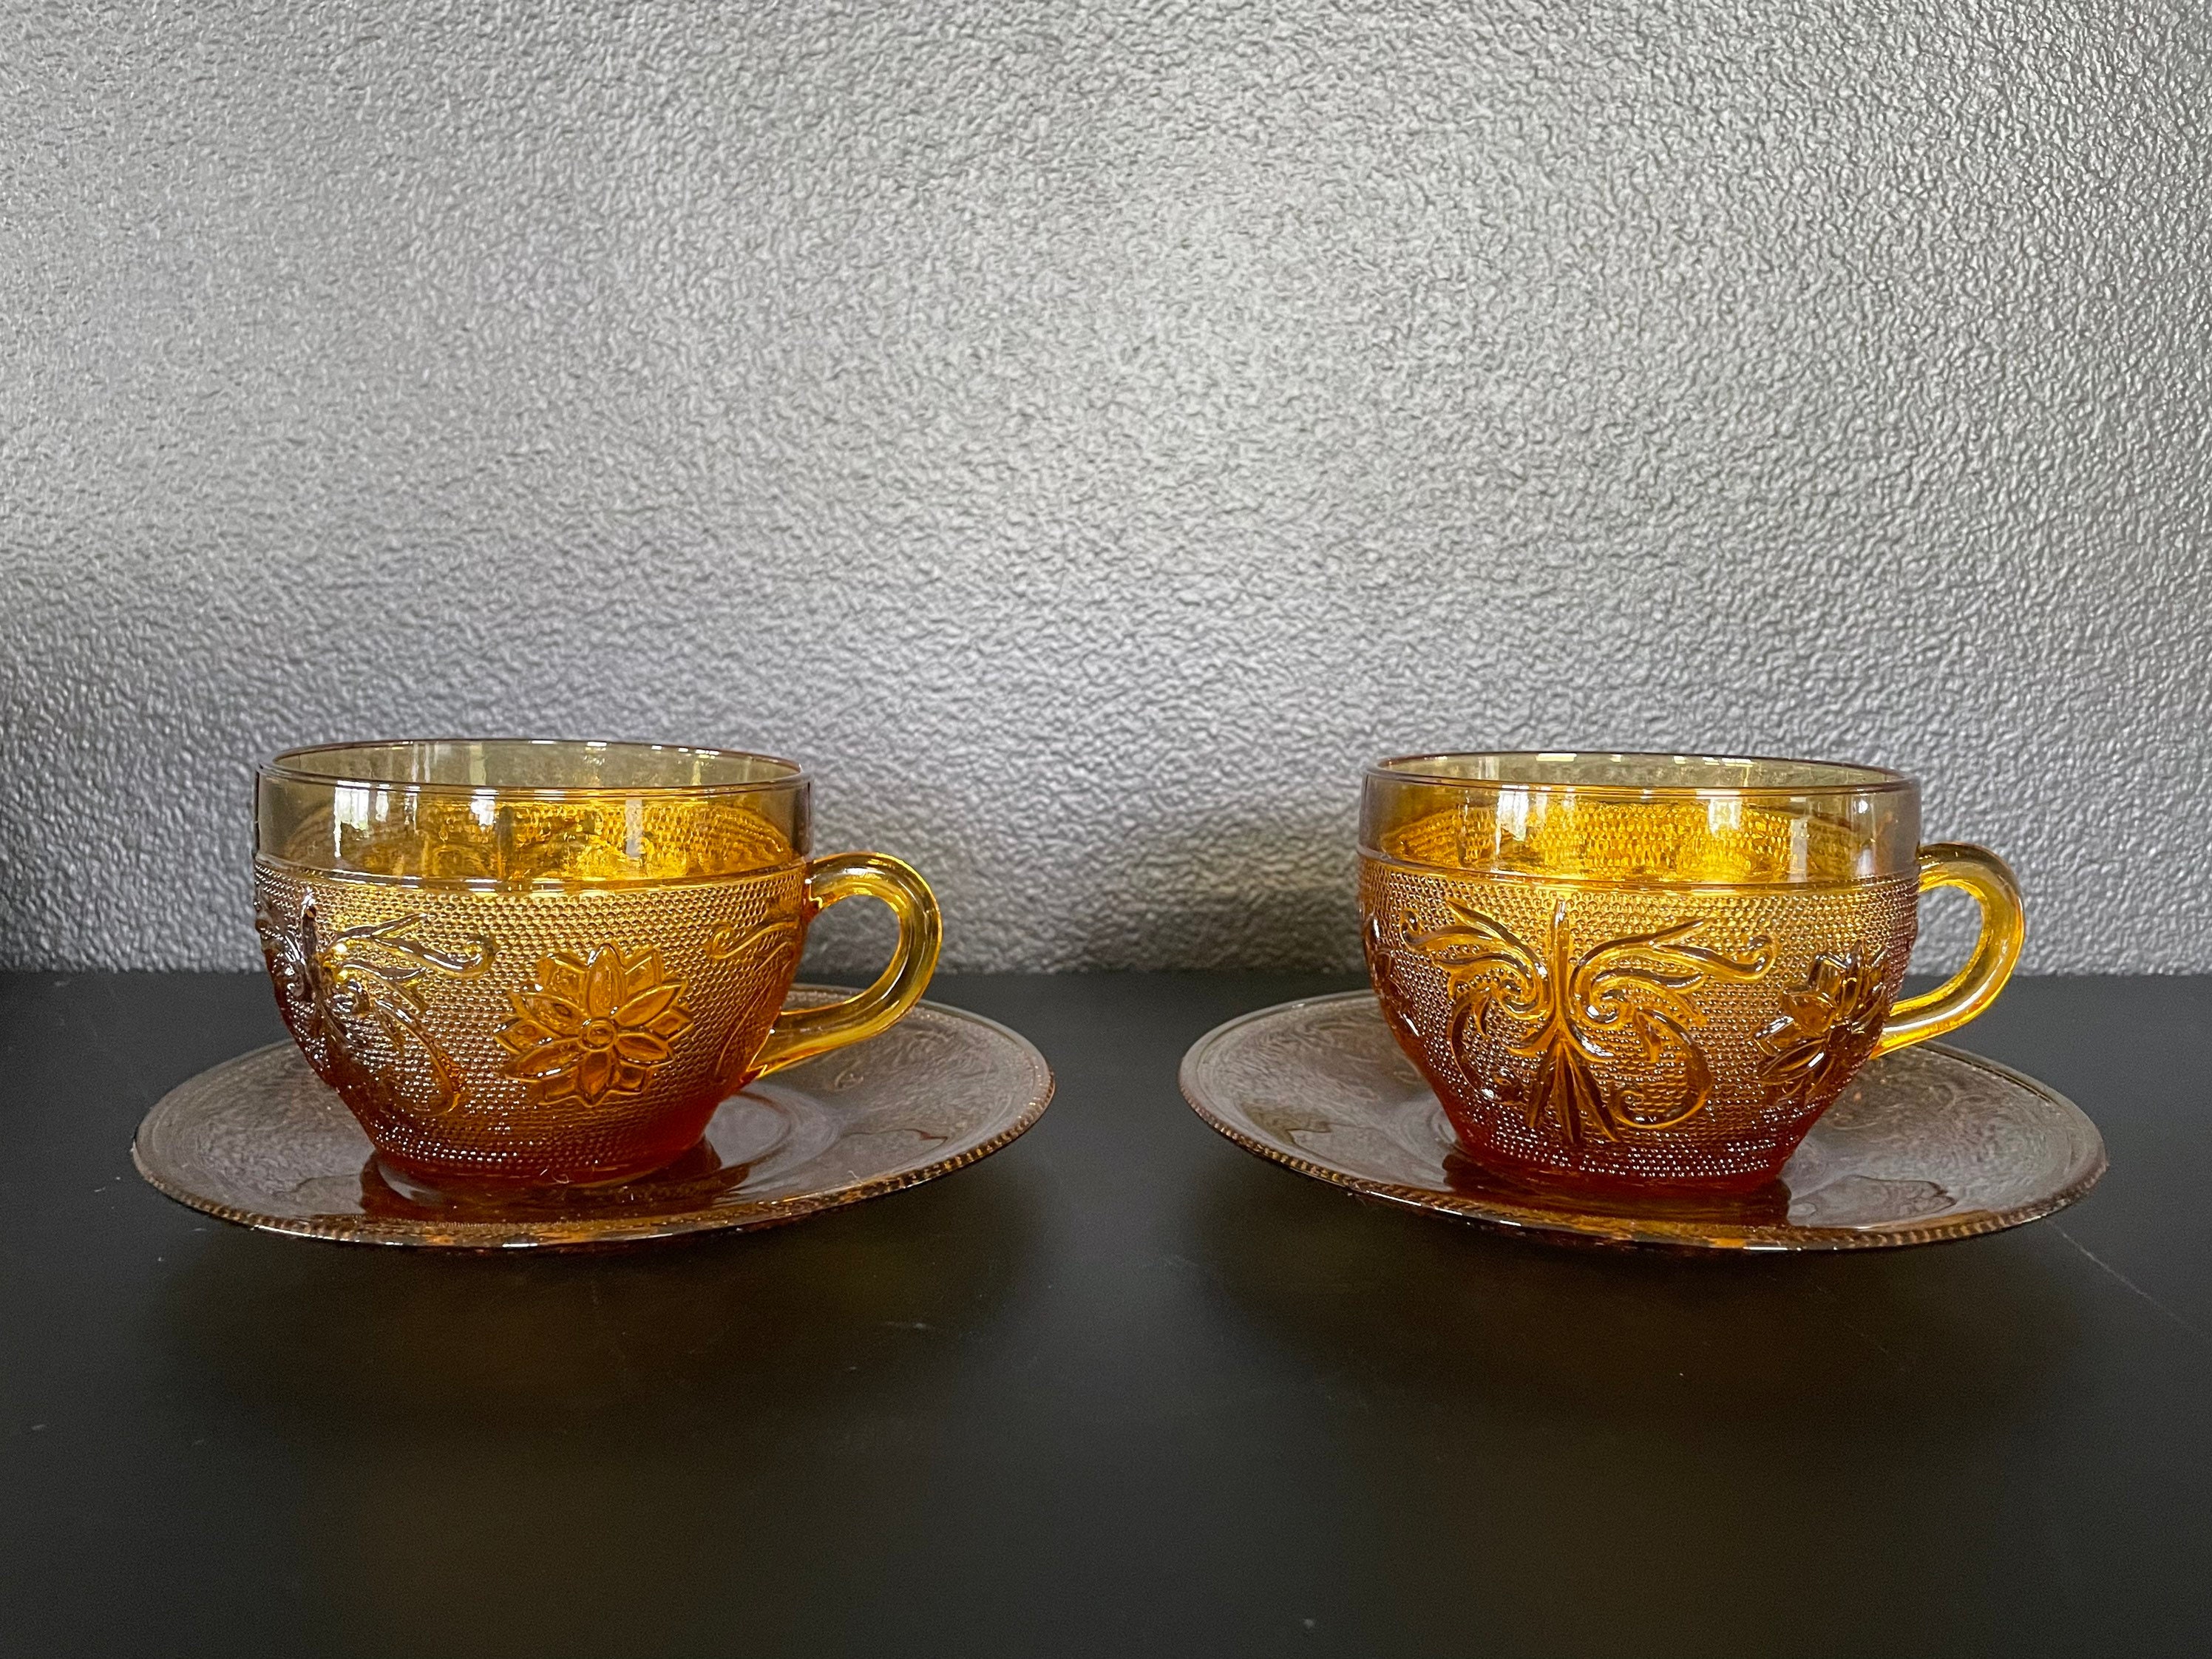 6oz New Design Coffee Tea Glasses Set with Handle Glass Tea Cup Drinkware  for Latte Tea Juice Middle East Style Afternoon Tea Mug Coffee Cup - China  Glass Tea Mug and Engraved